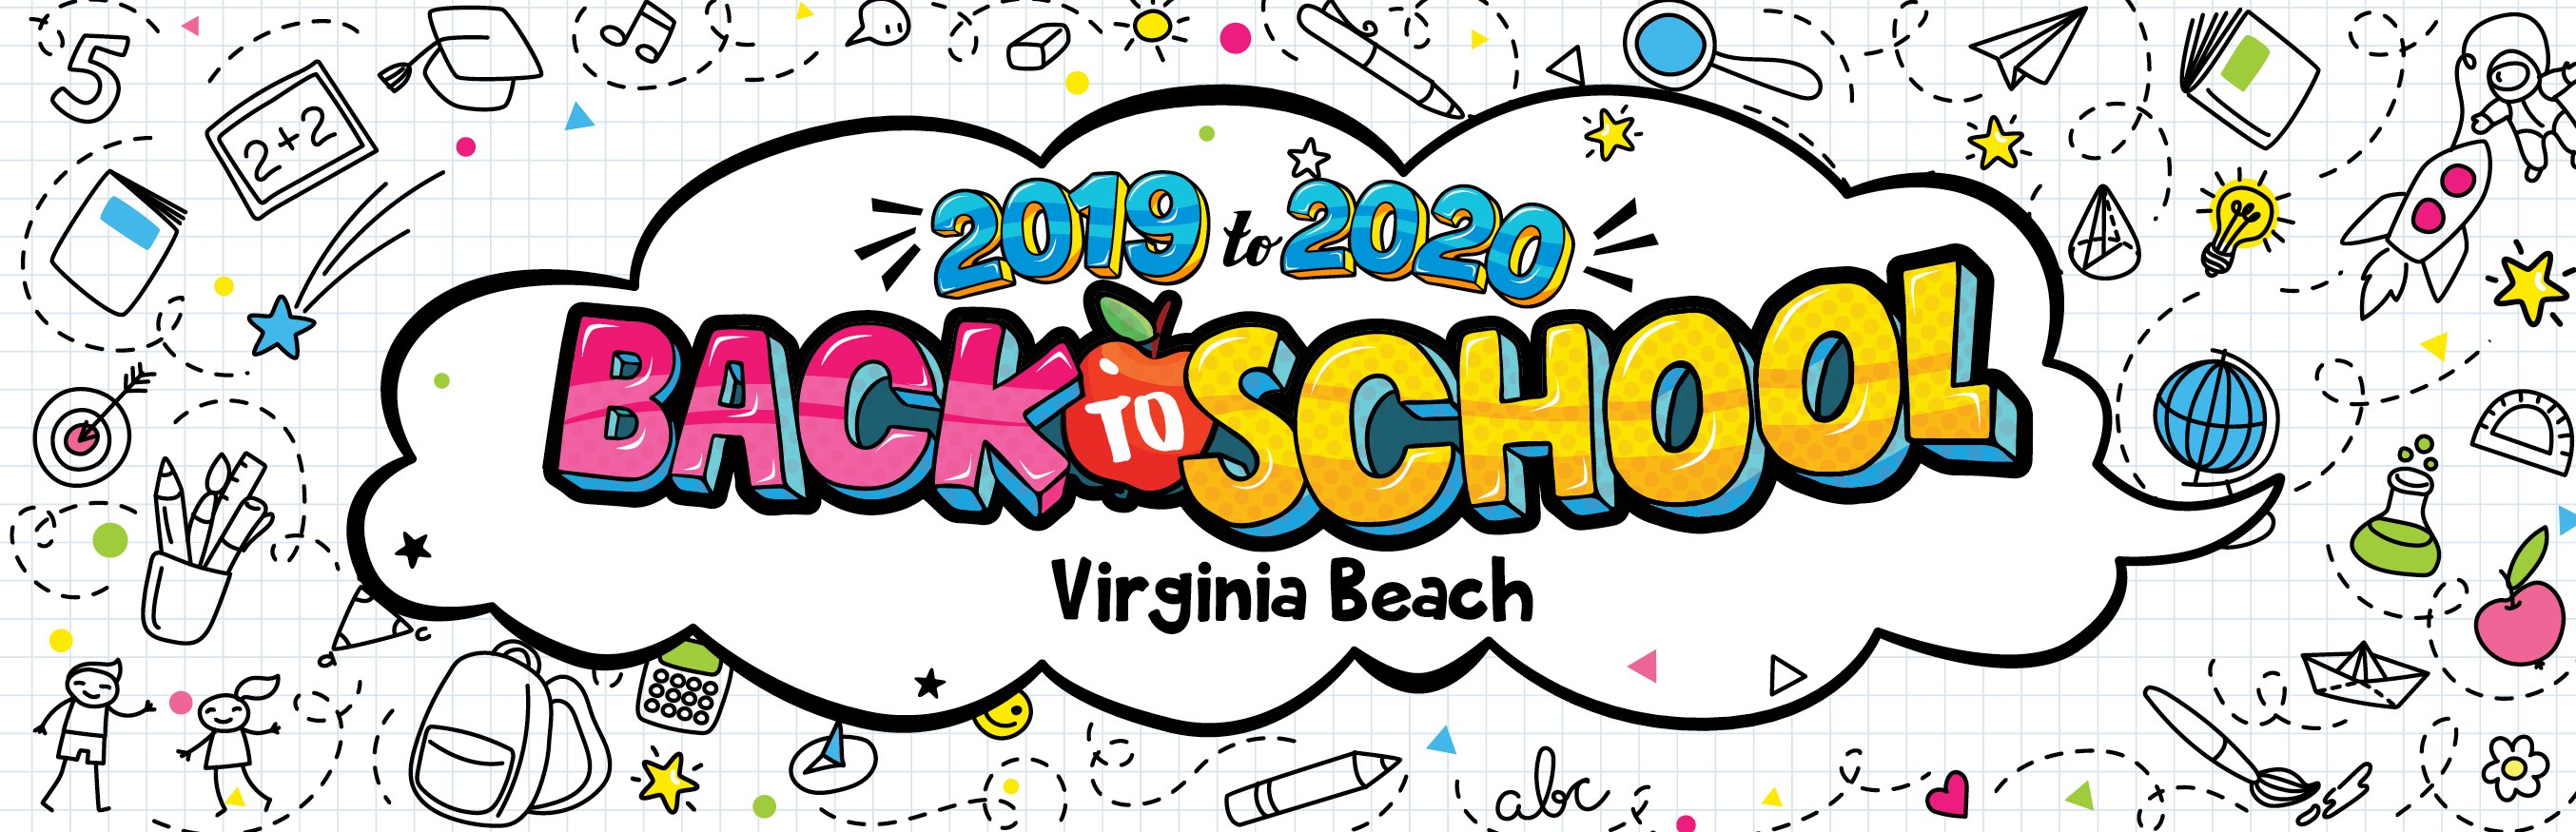 20192020 School Calendar Virginia Beach